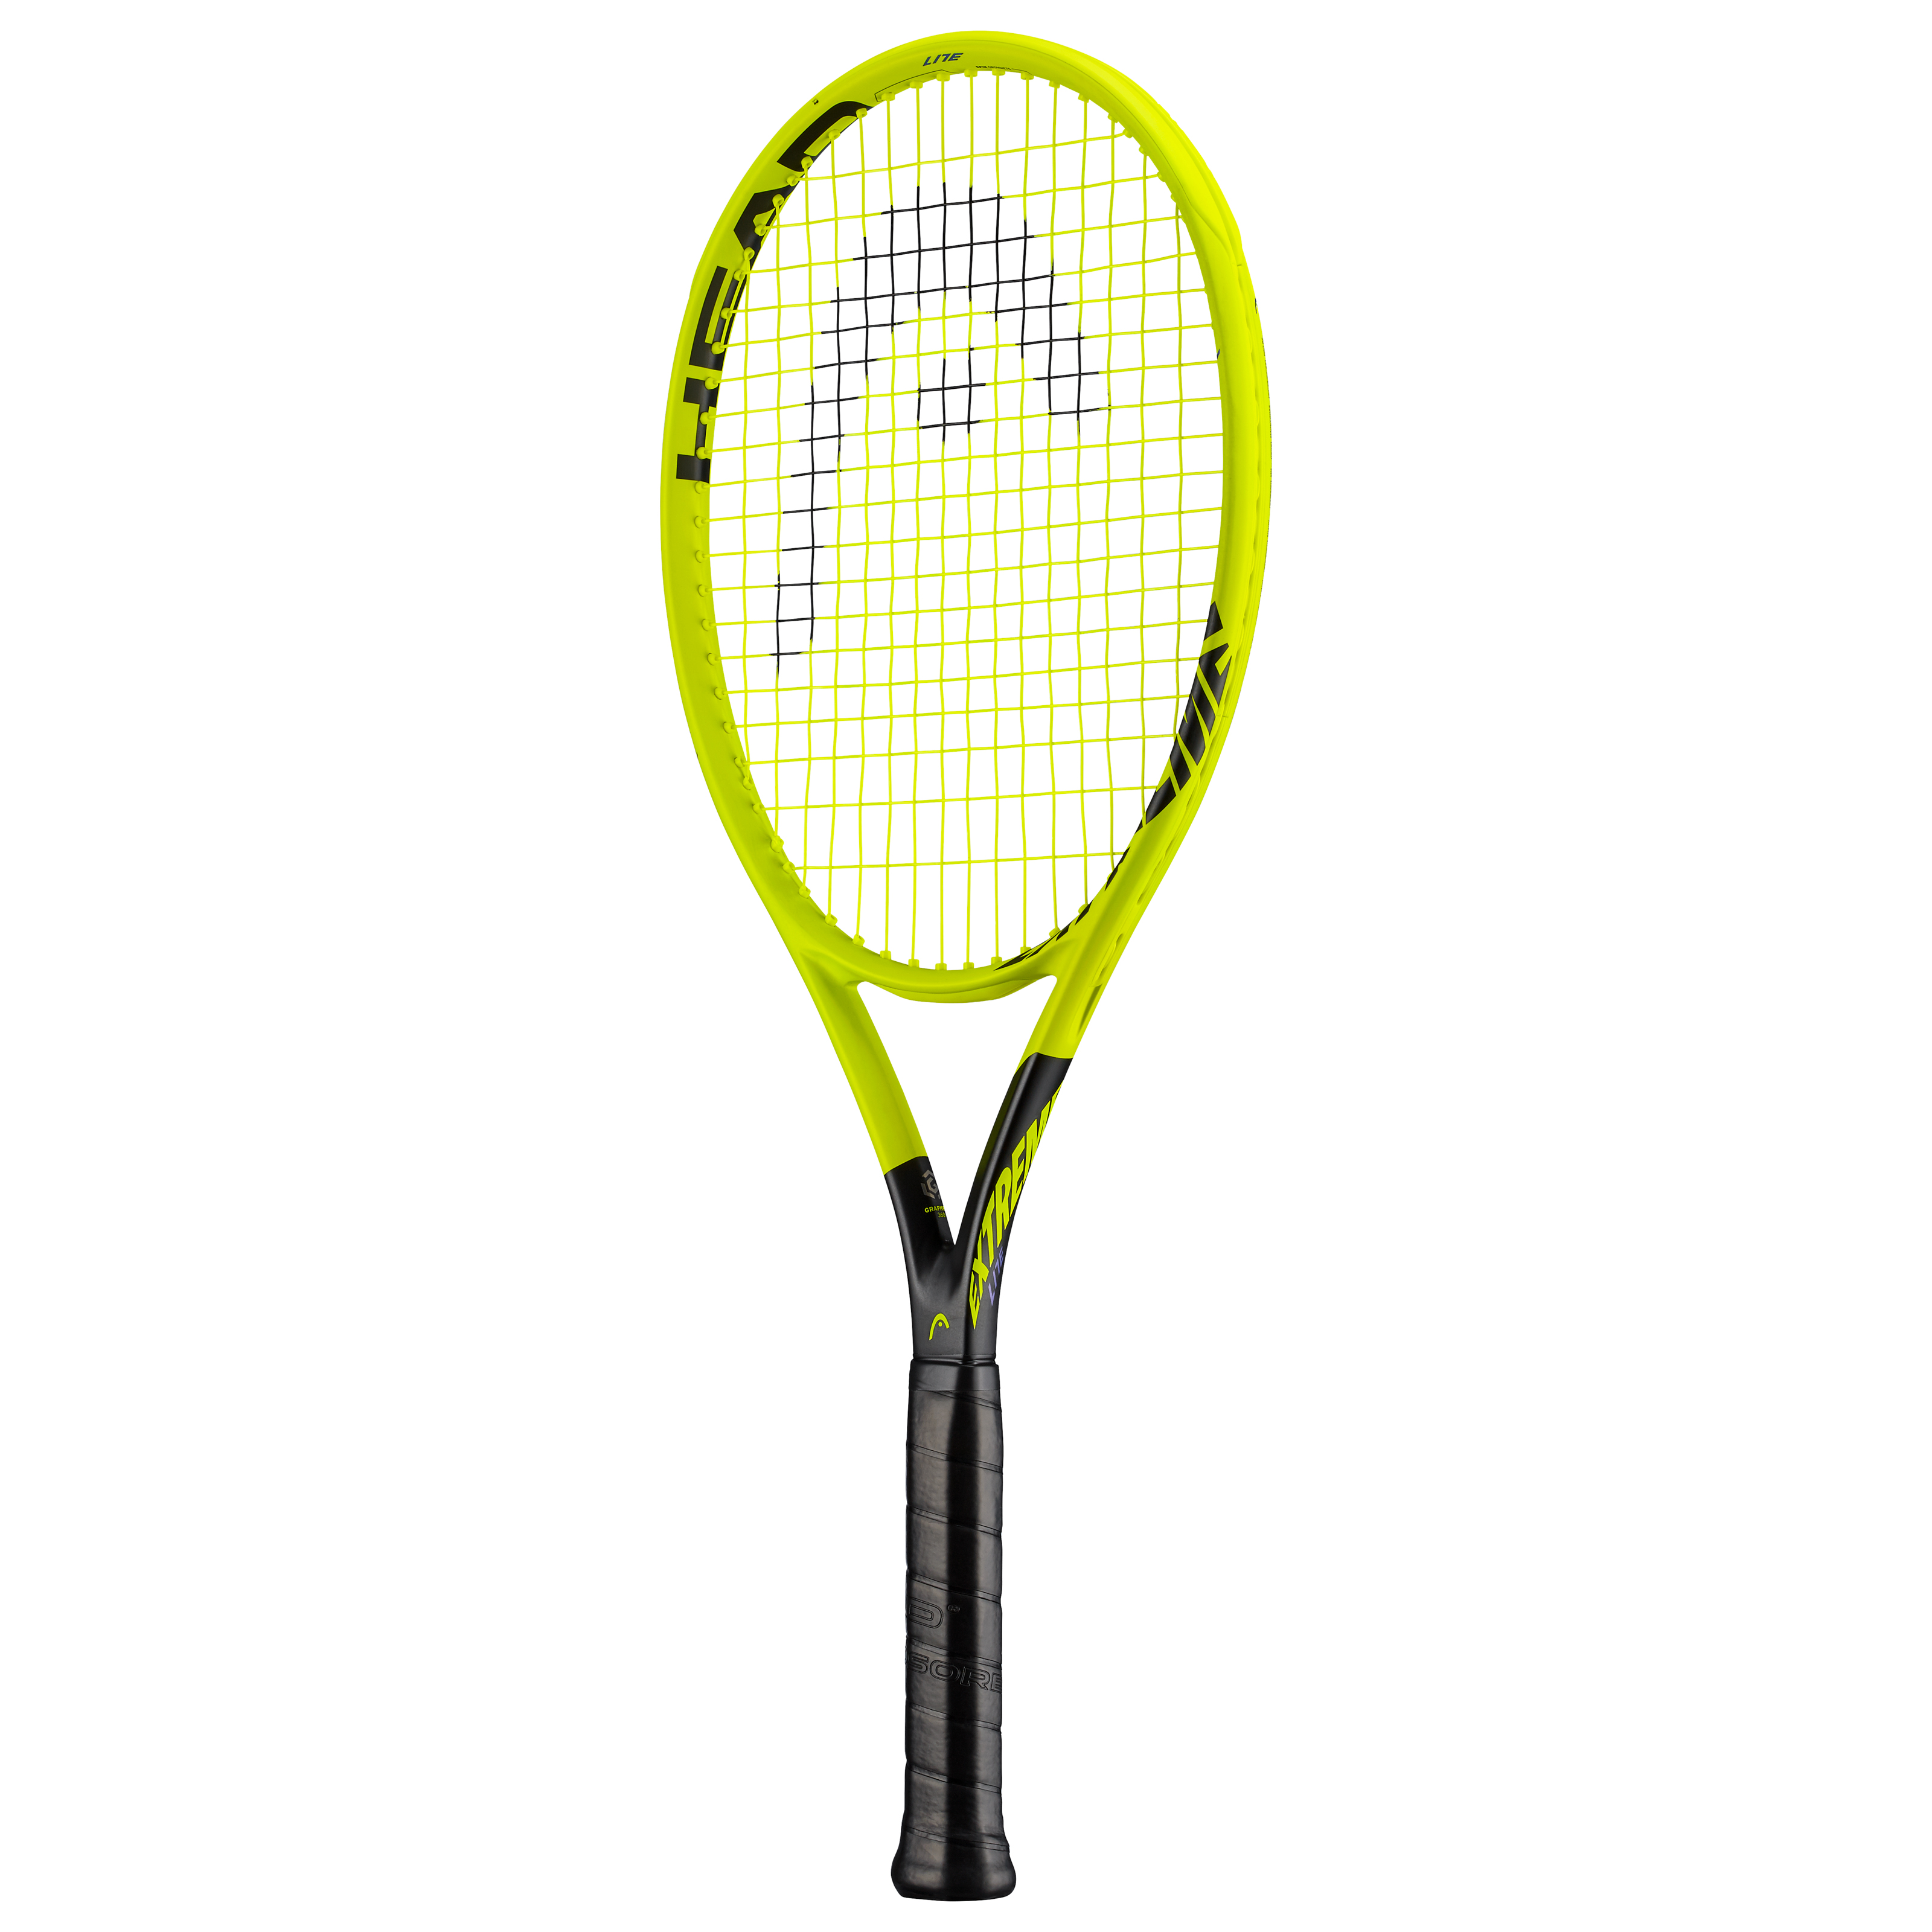 Ракетка для большого тенниса взрослая. Head MX Spark Elite gr3. Ракетка для большого тенниса head extreme Pro. Теннисная ракетка head Graphene 360+ Instinct s. Ракетка head Tour Pro 232219.